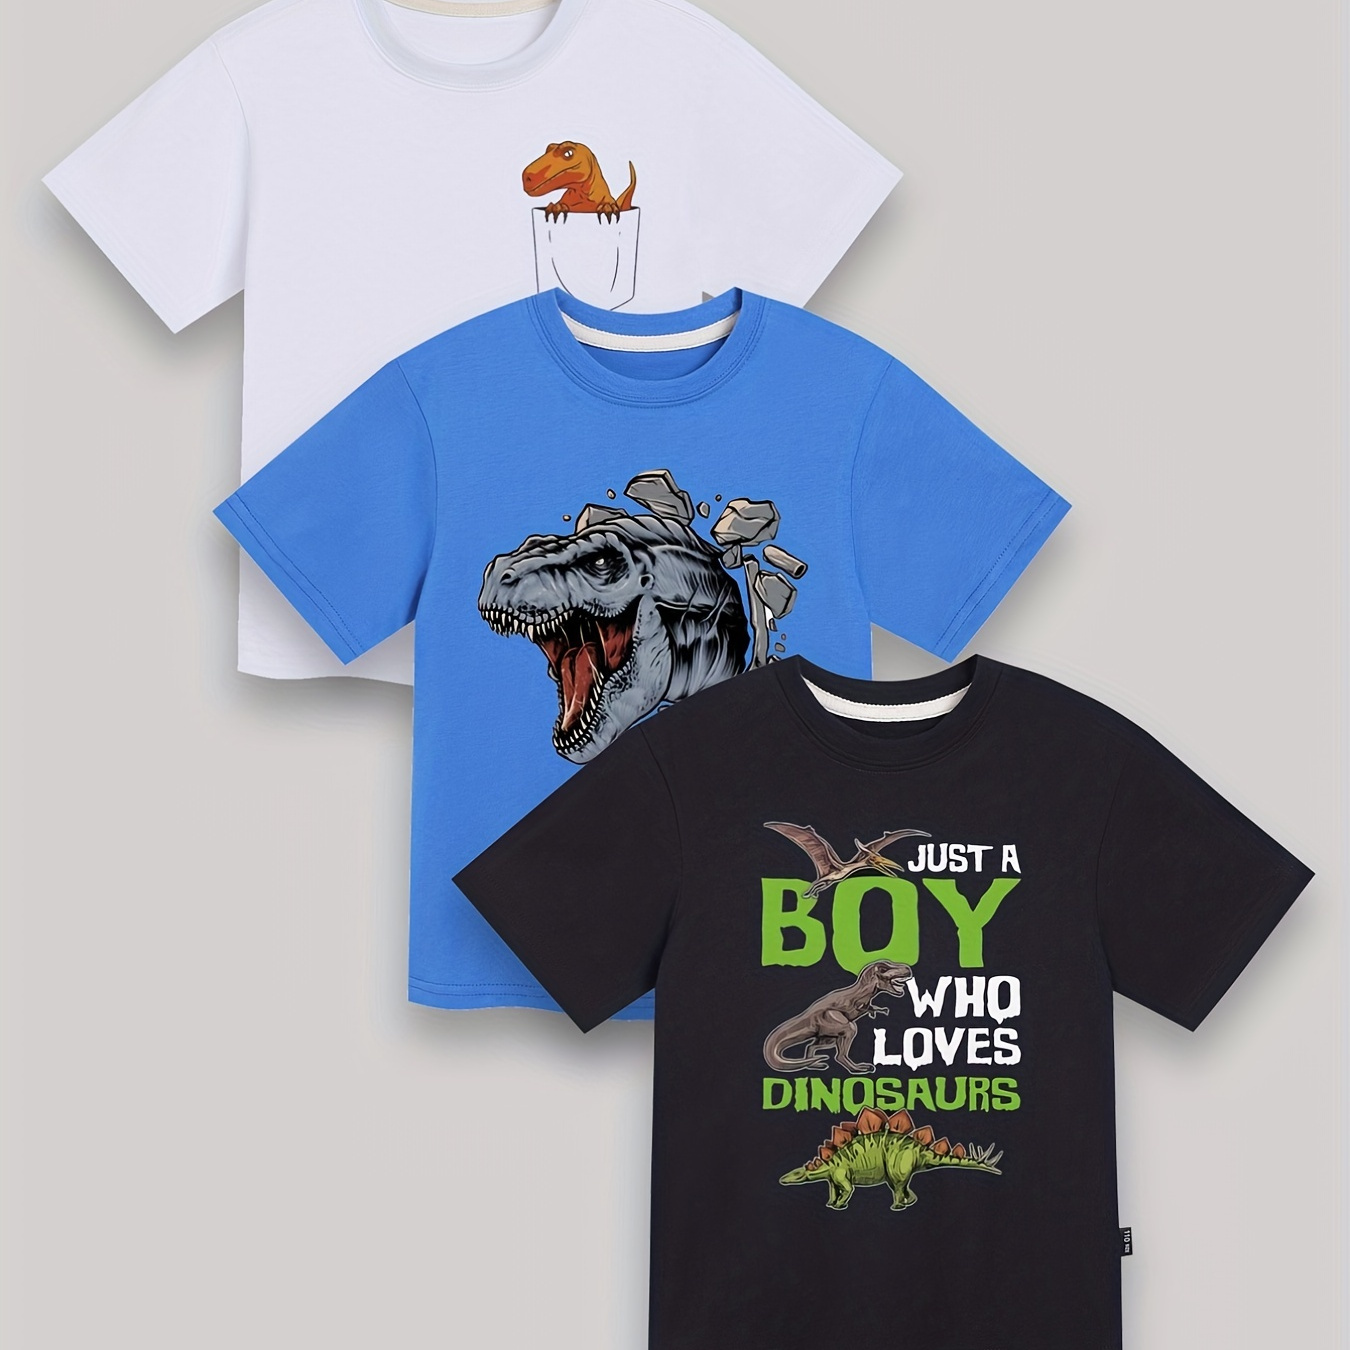 

3pcs Dinosaur Series Print Boys Creative Cotton T-shirt, Casual Lightweight Comfy Short Sleeve Crew Neck Tee Tops, Kids Clothings For Summer